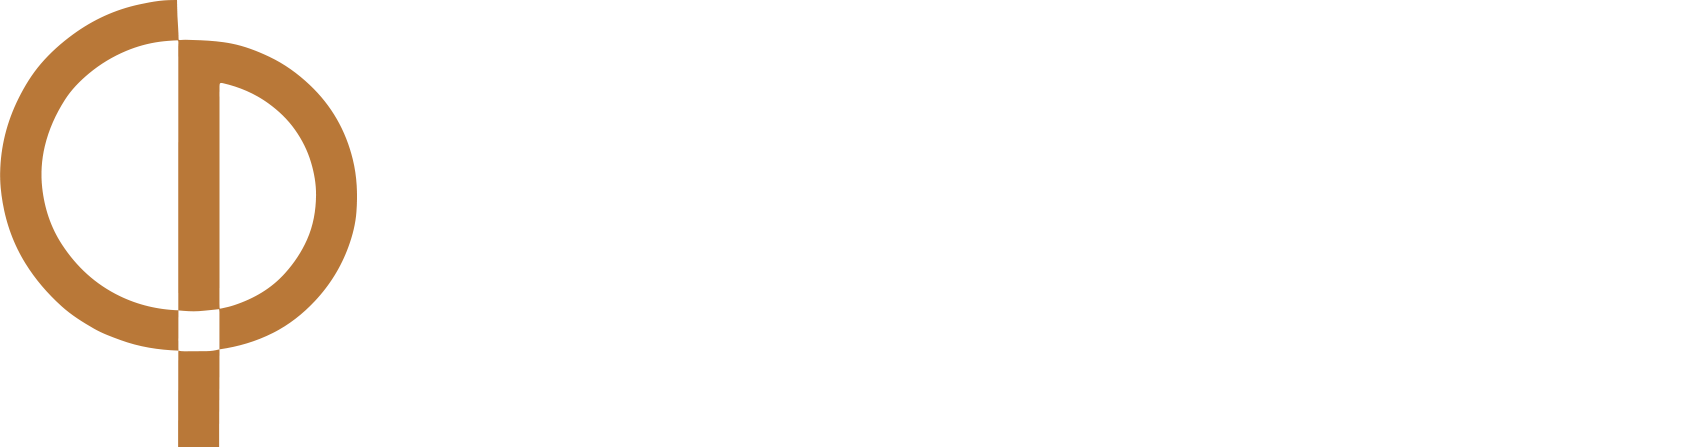 Chandler Park Dental Care logo